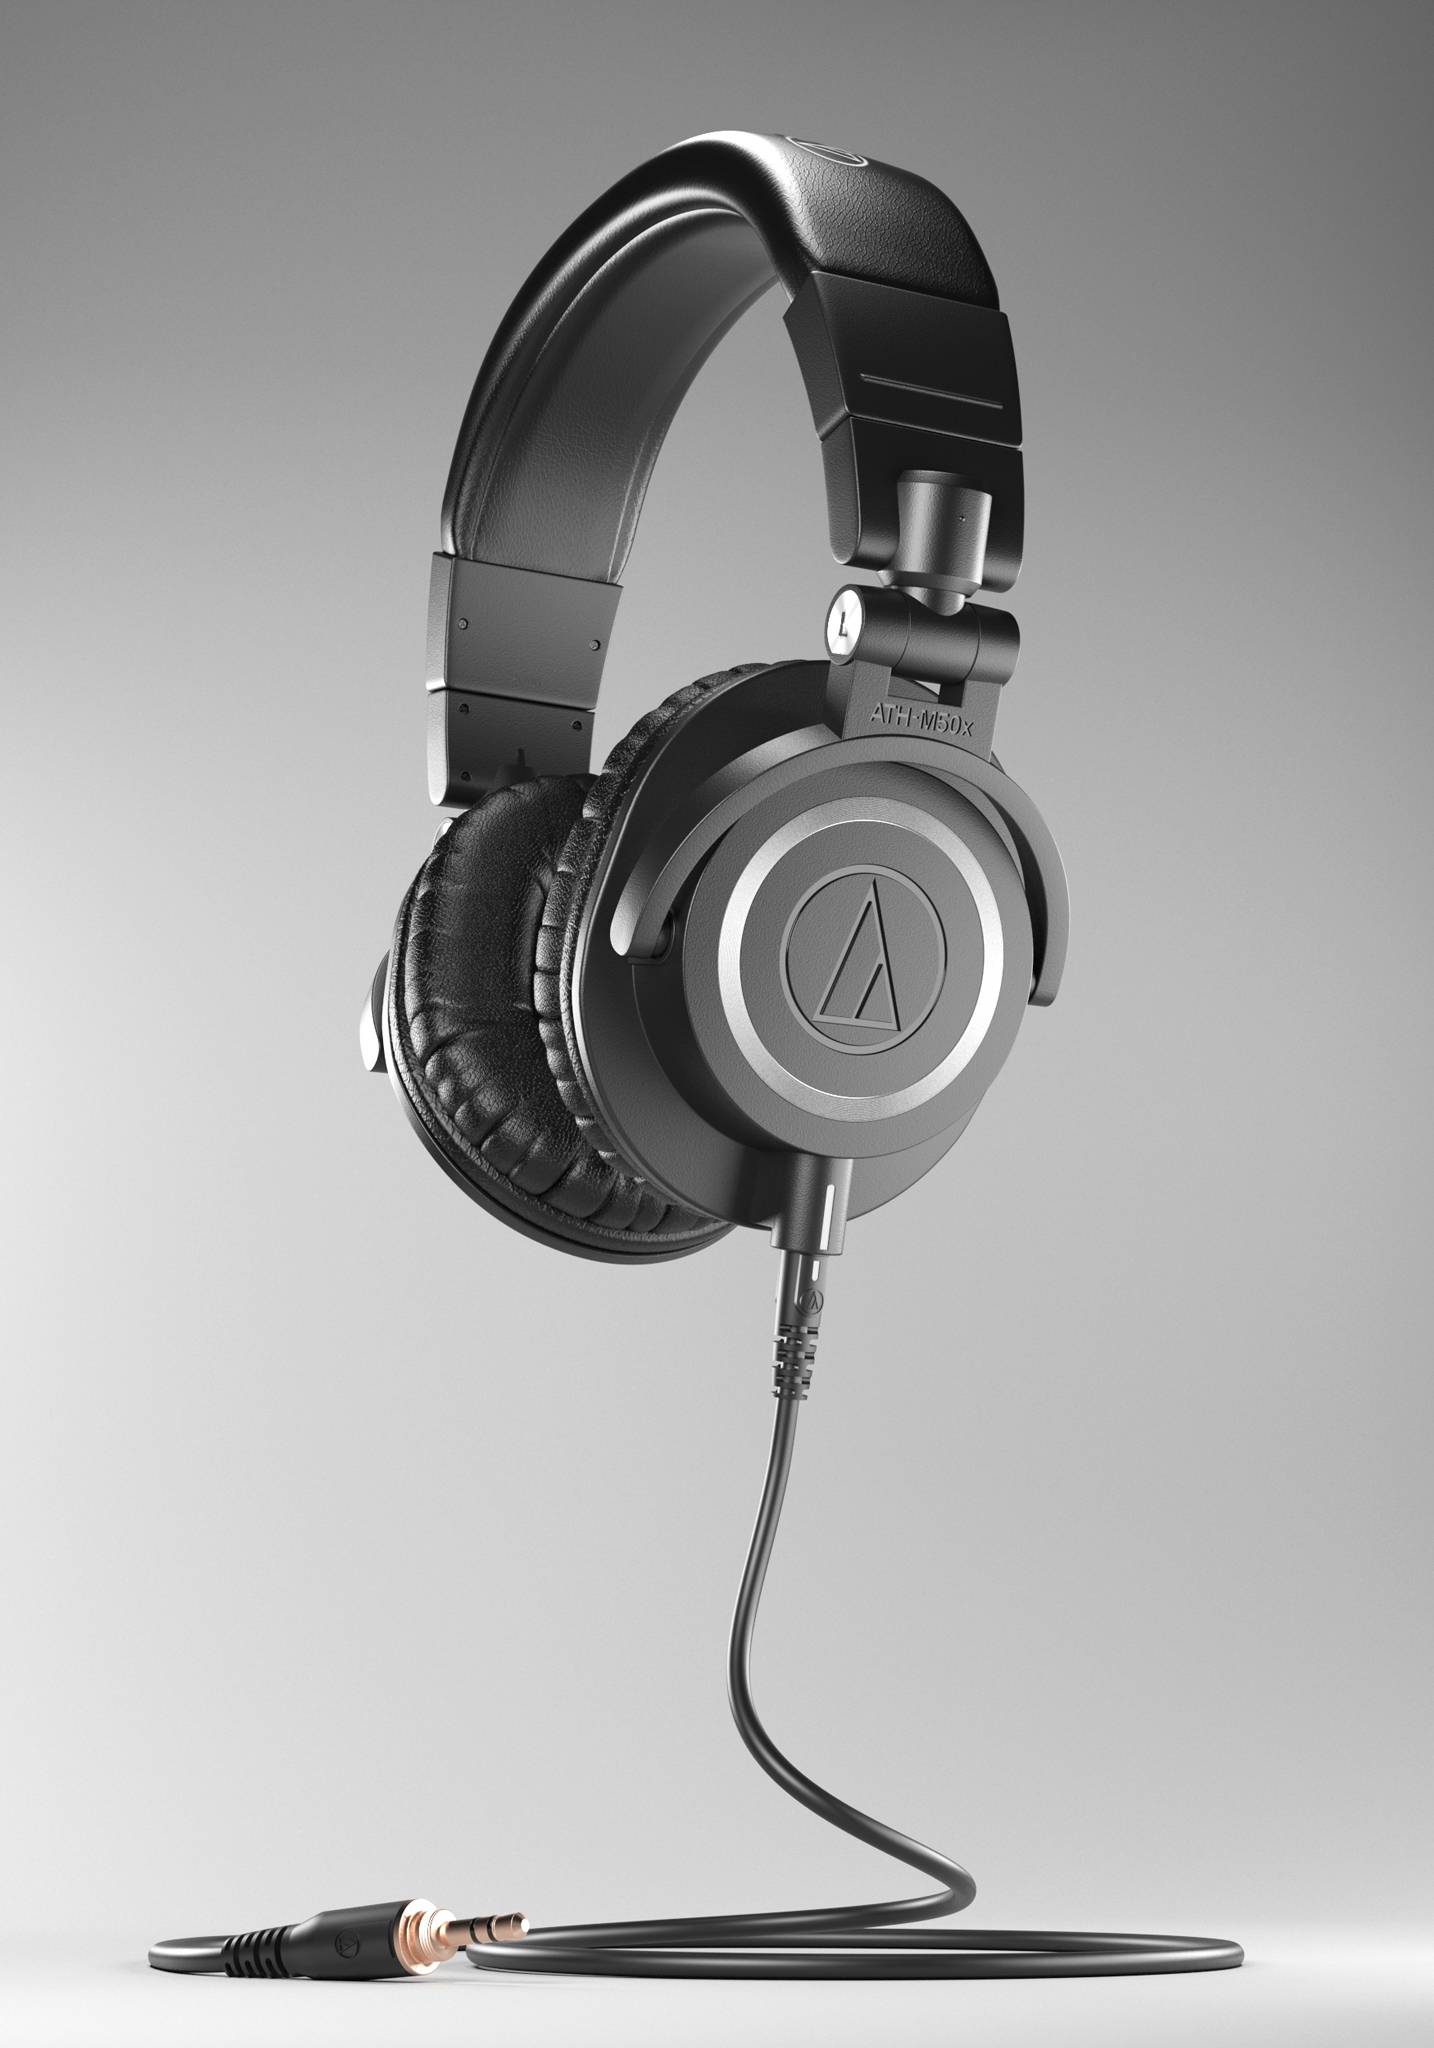 Photoreal Audio-Technica ATH-M50x 3D Model